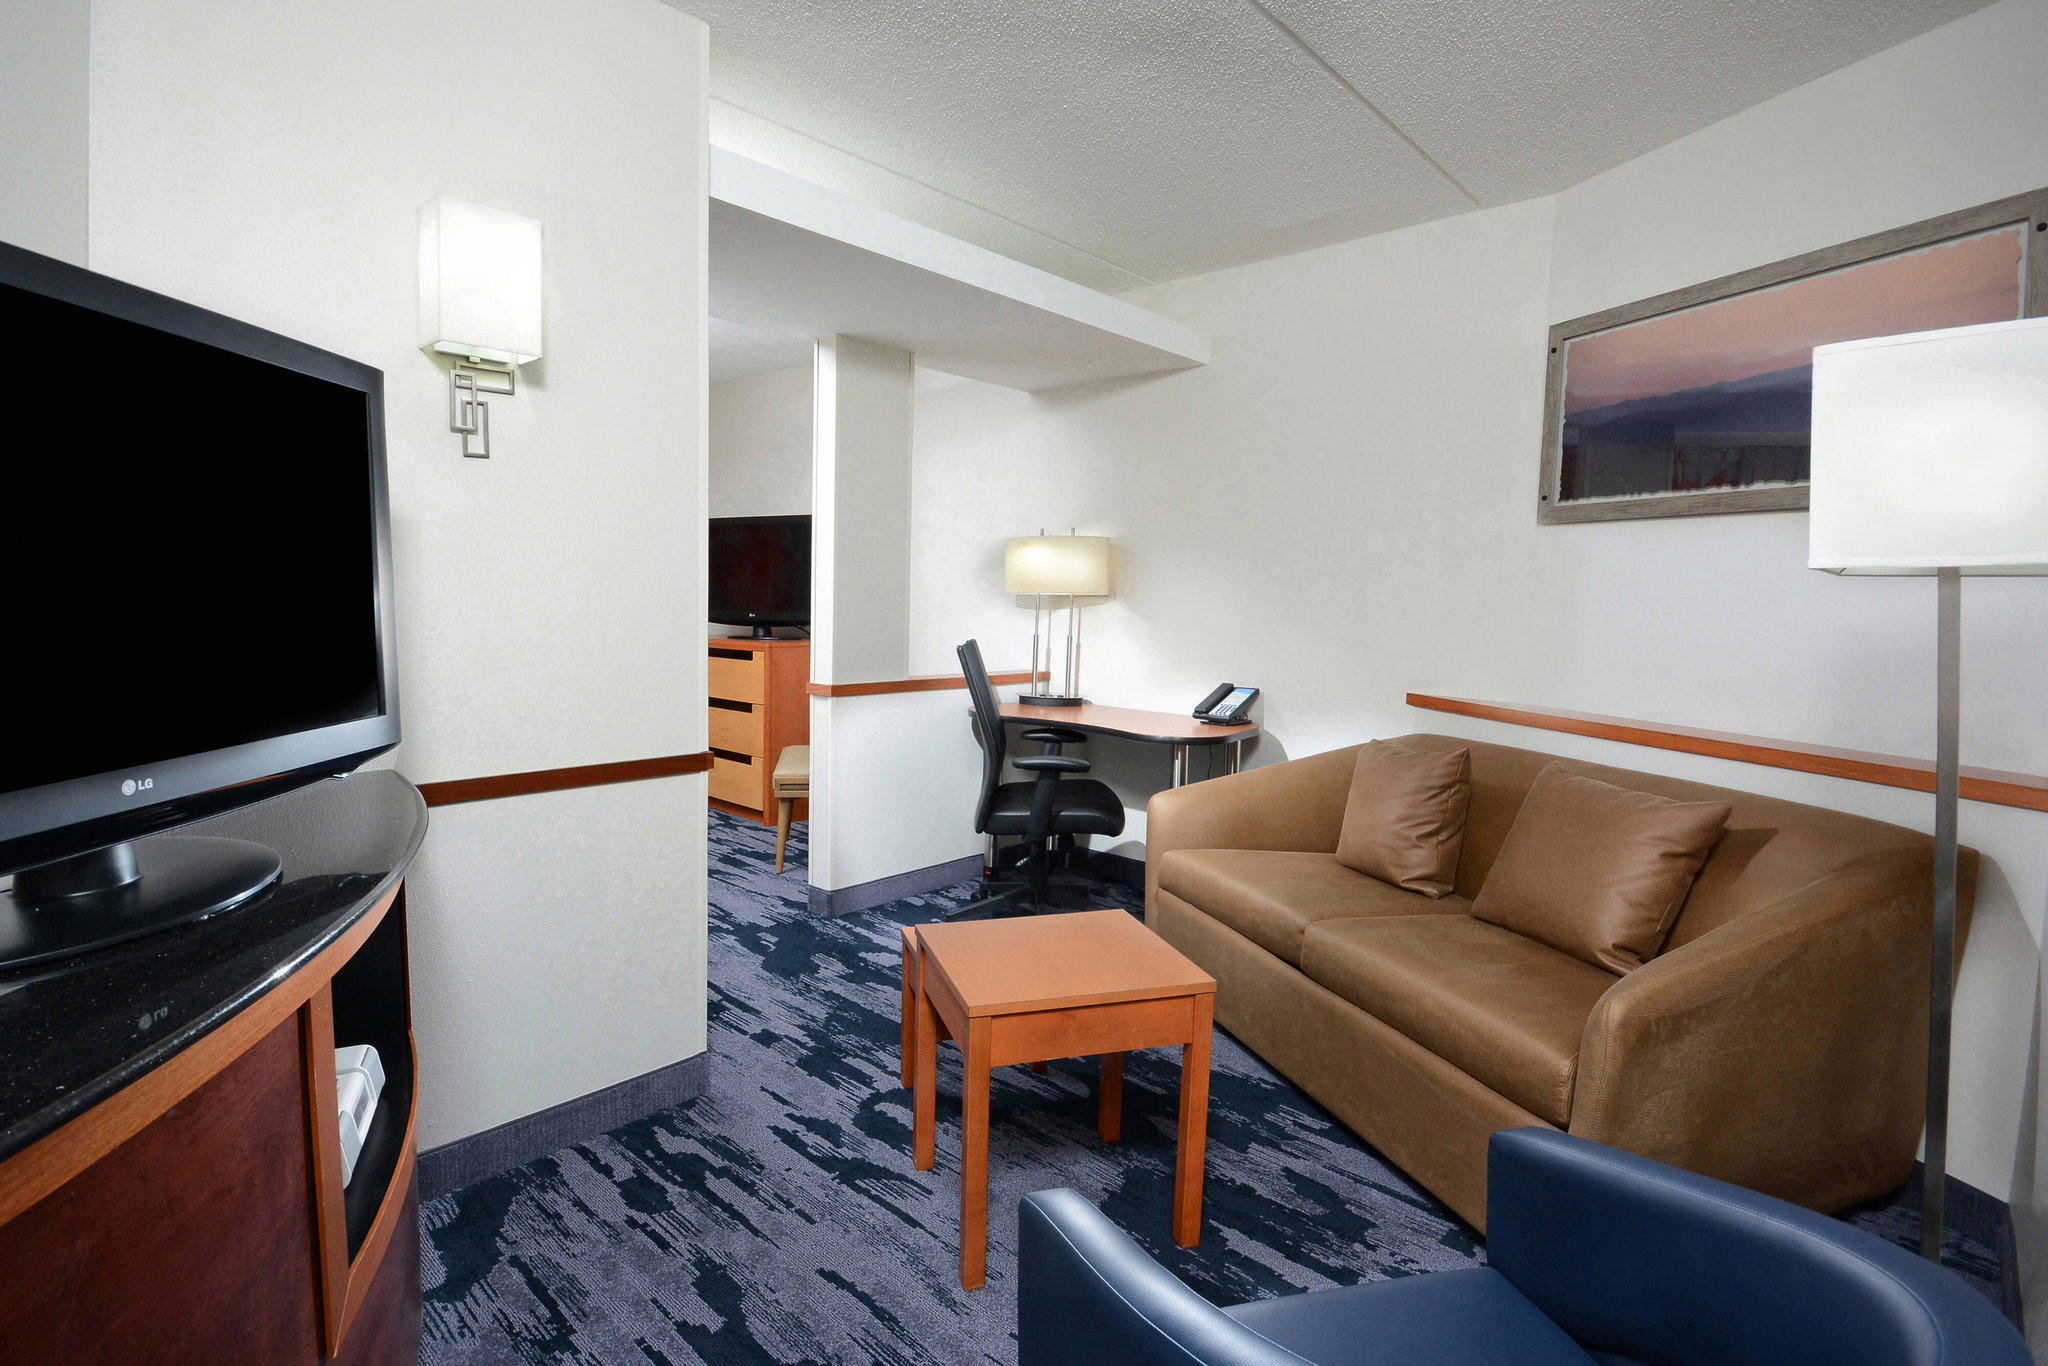 Fairfield Inn & Suites by Marriott Charlottesville North Photo